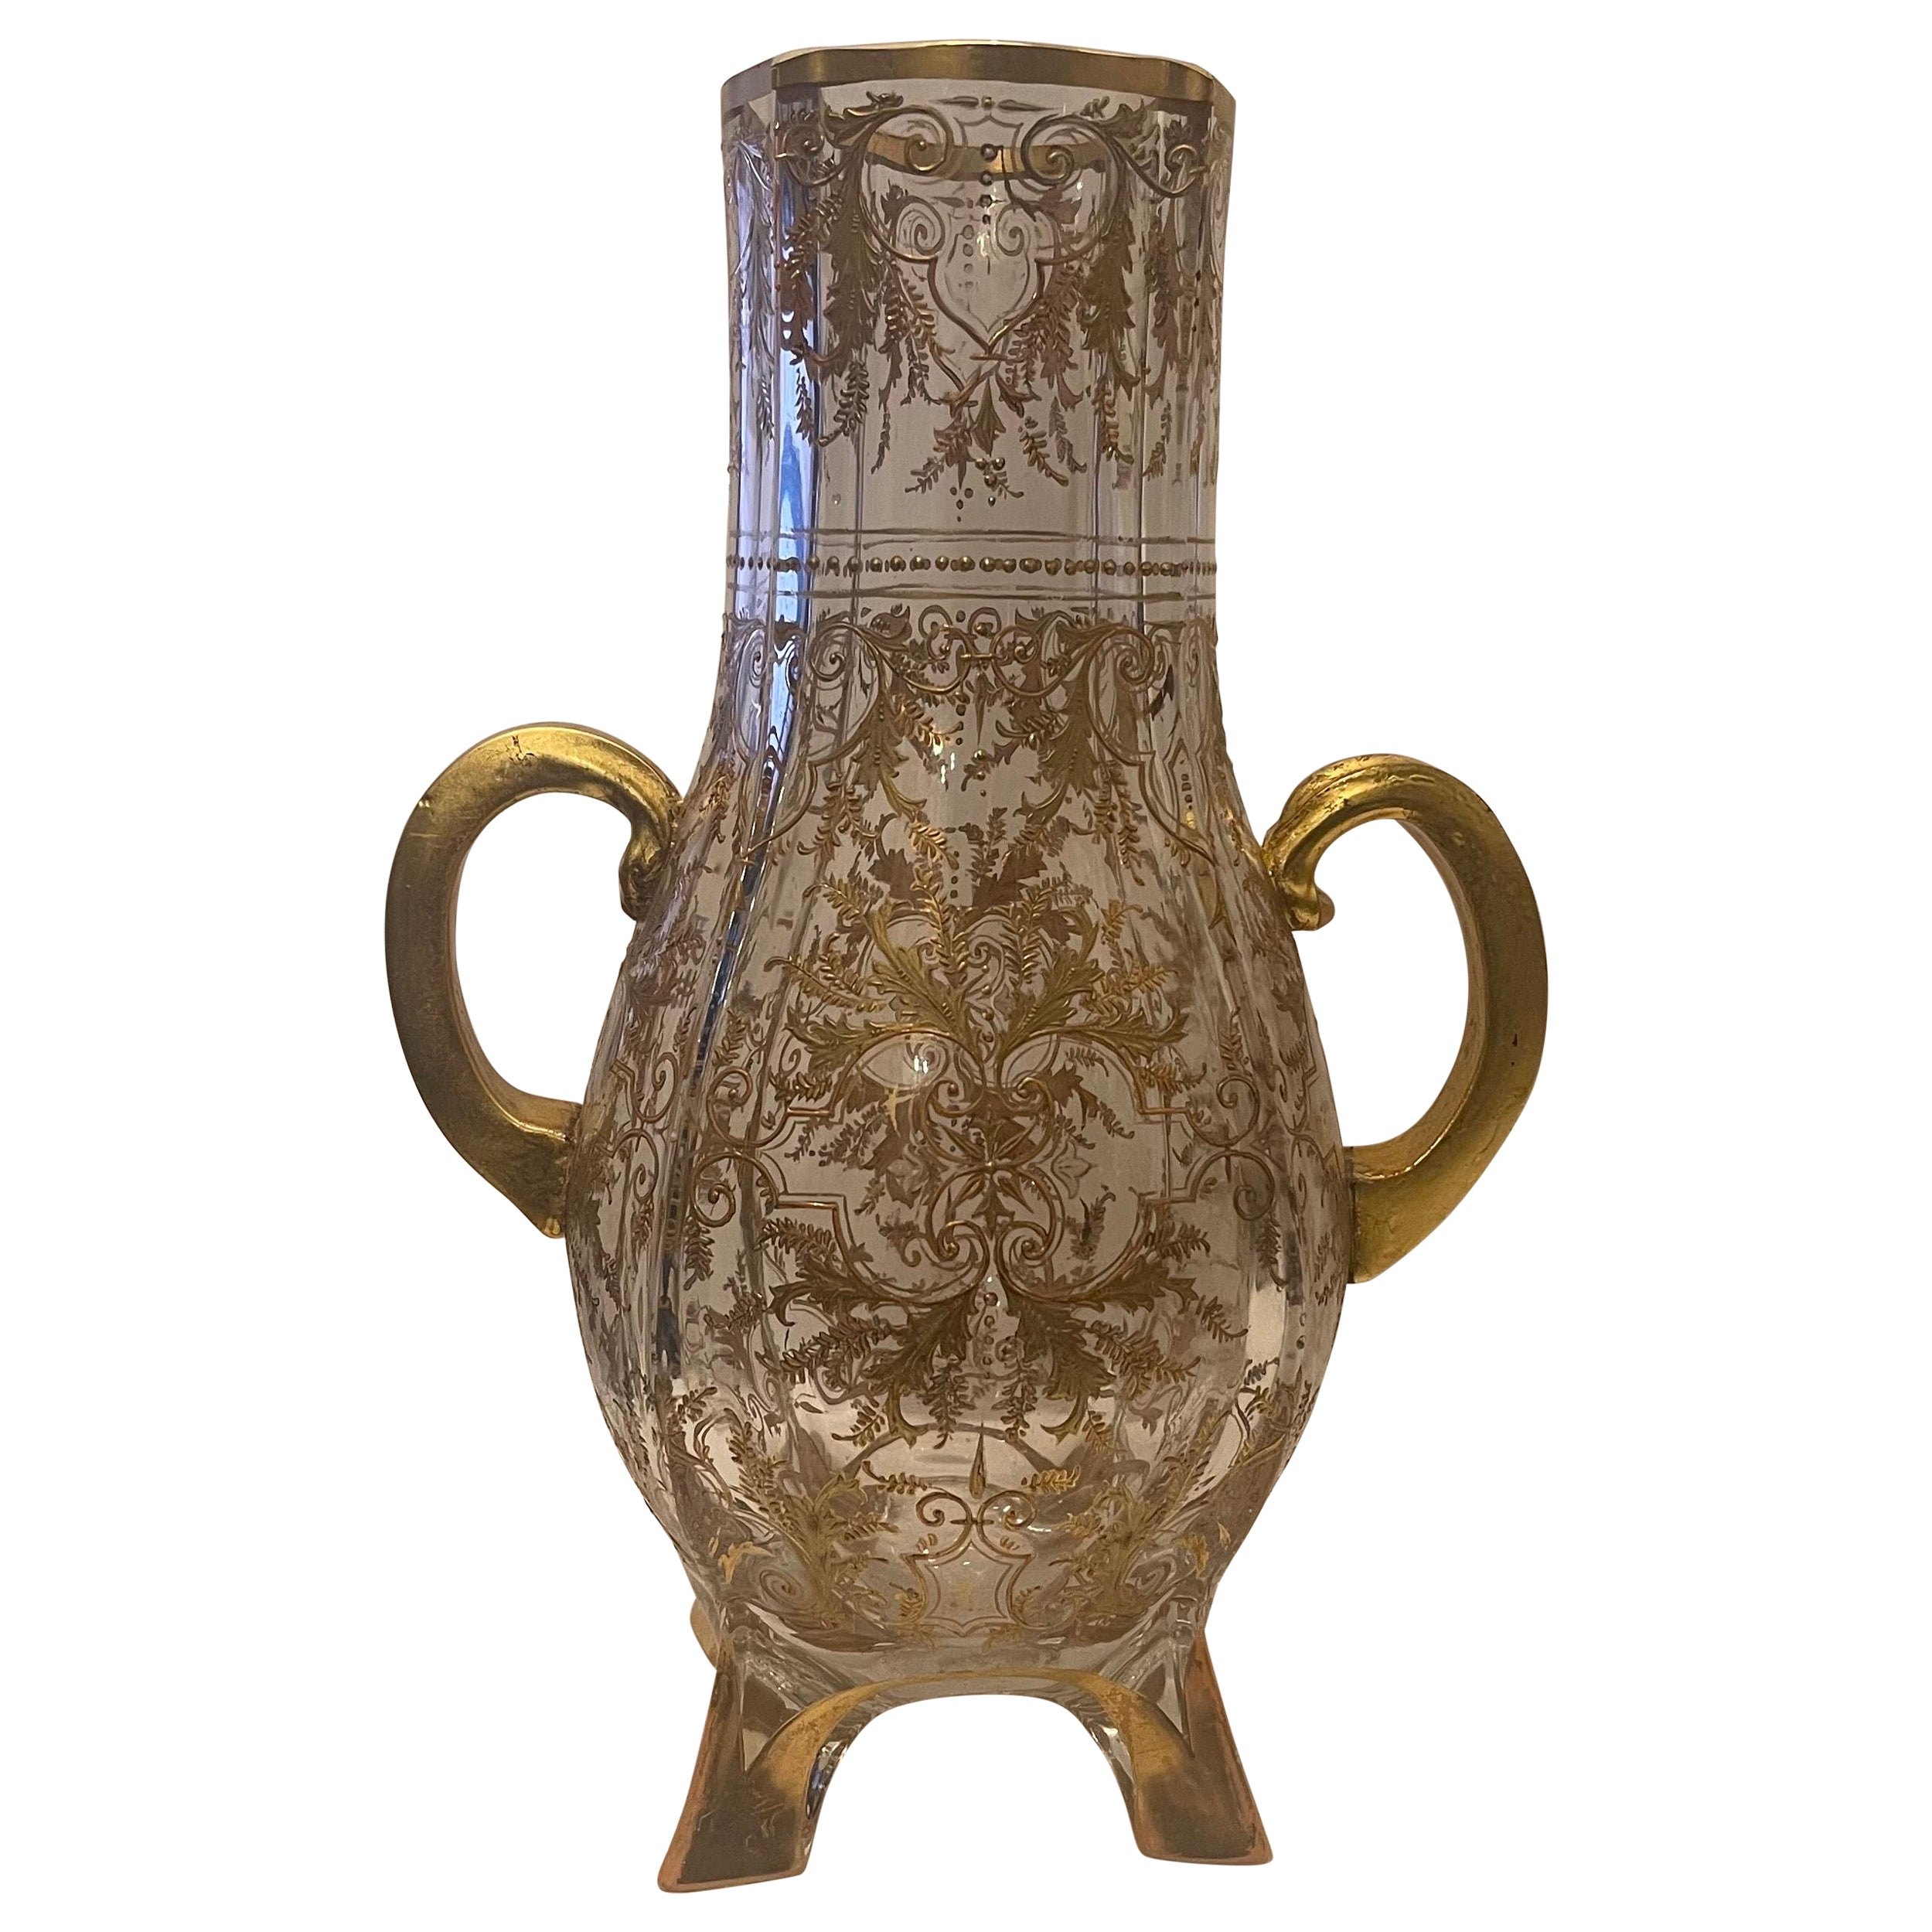 Wonderful Moser Clear Art Glass Vase Raised Gold Gilt Hand Painted Enamel Urn